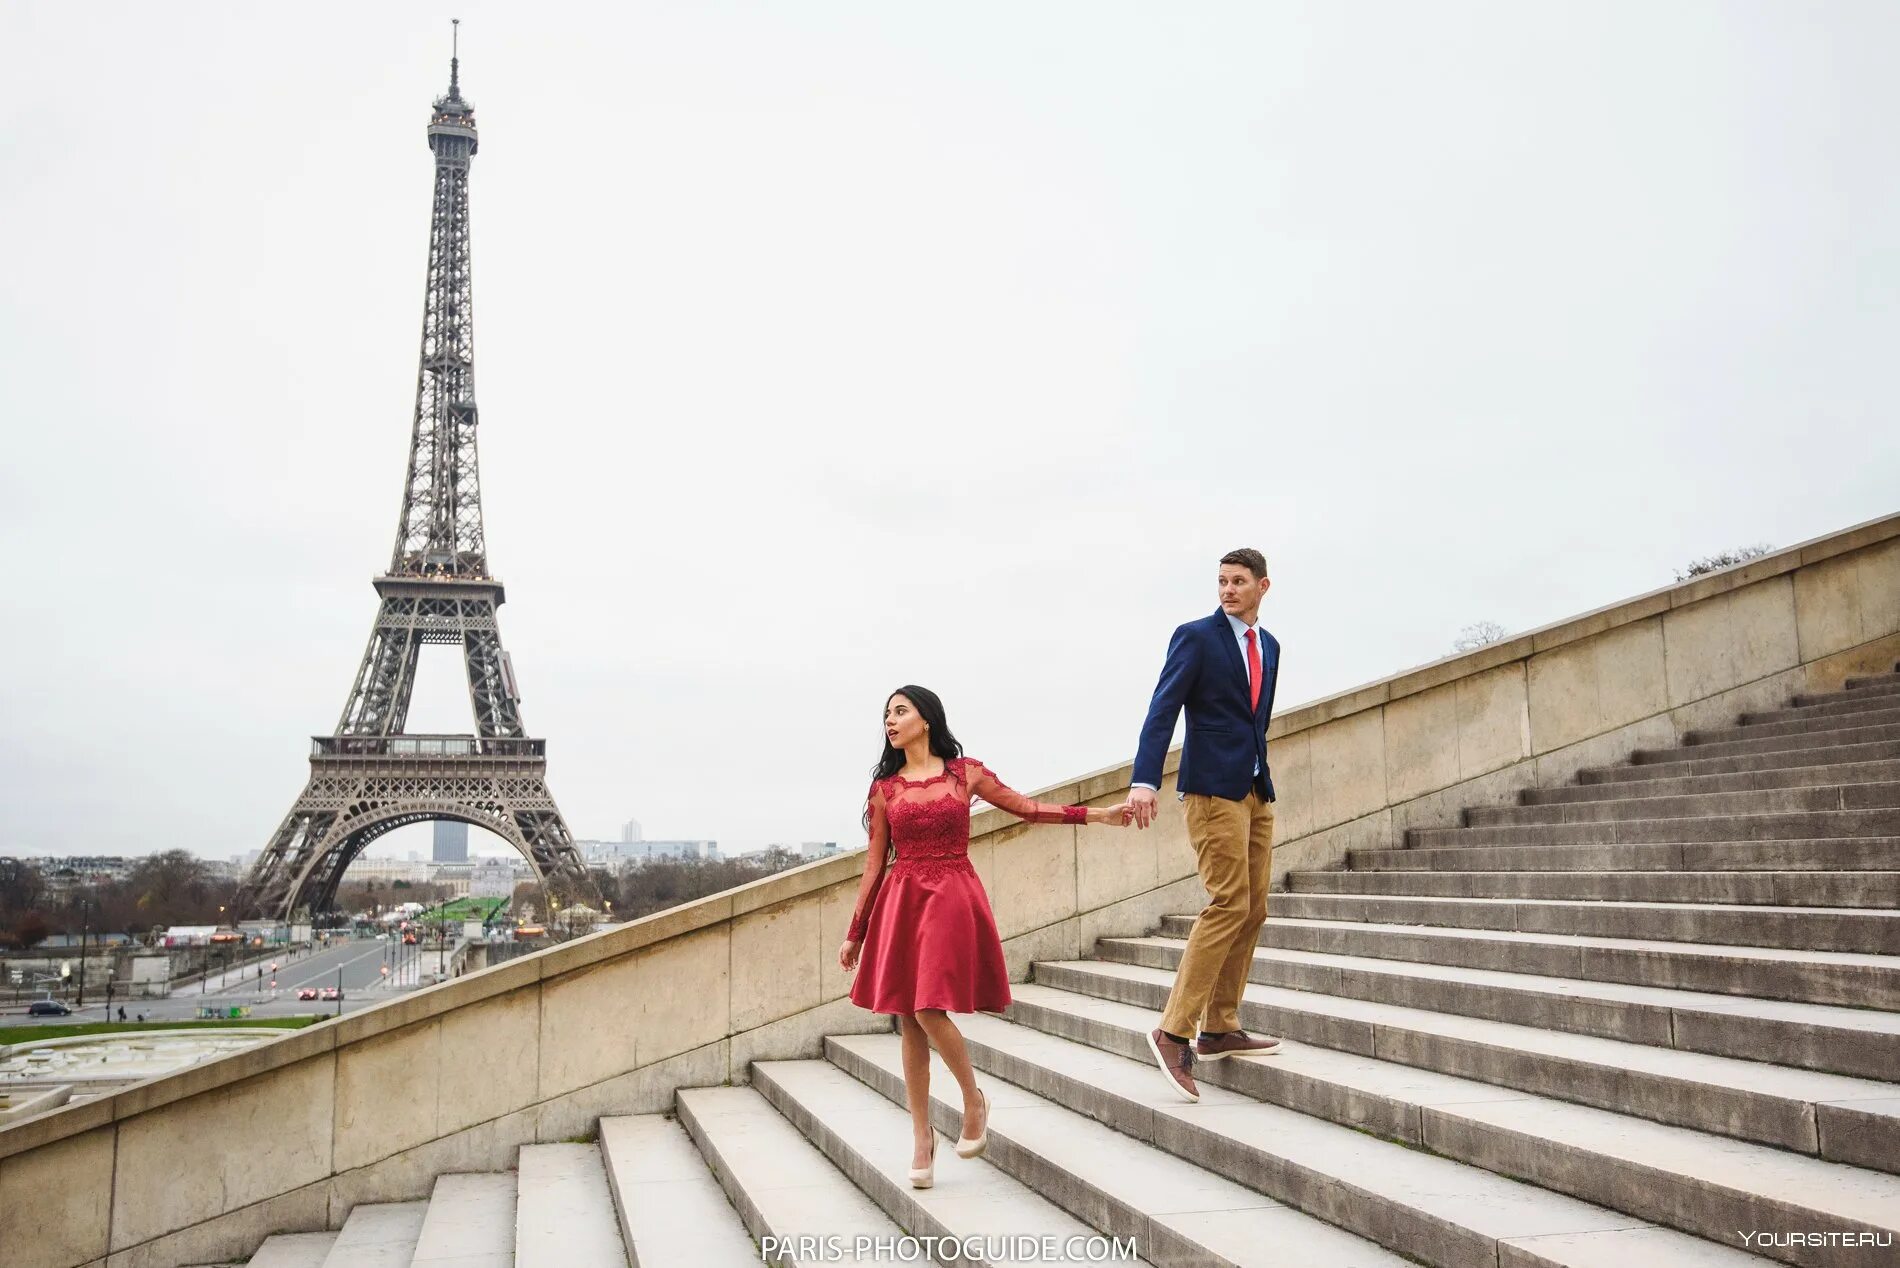 Фотосессия в Париже. На фоне Эйфелевой башни. Париж люди. Человек на фоне Эйфелевой башни.